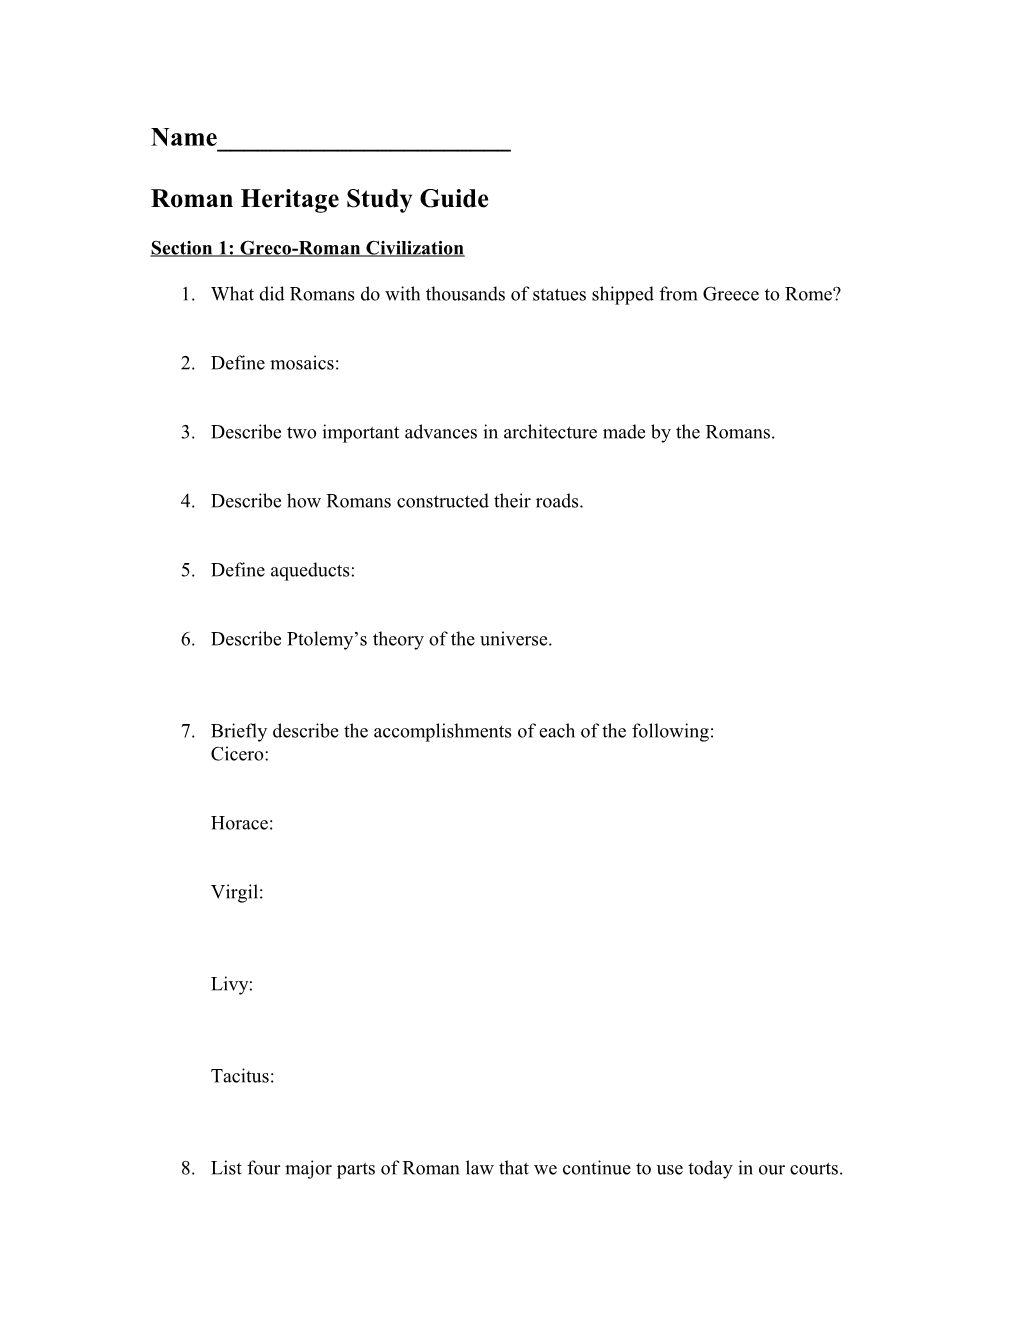 Roman Heritage Study Guide